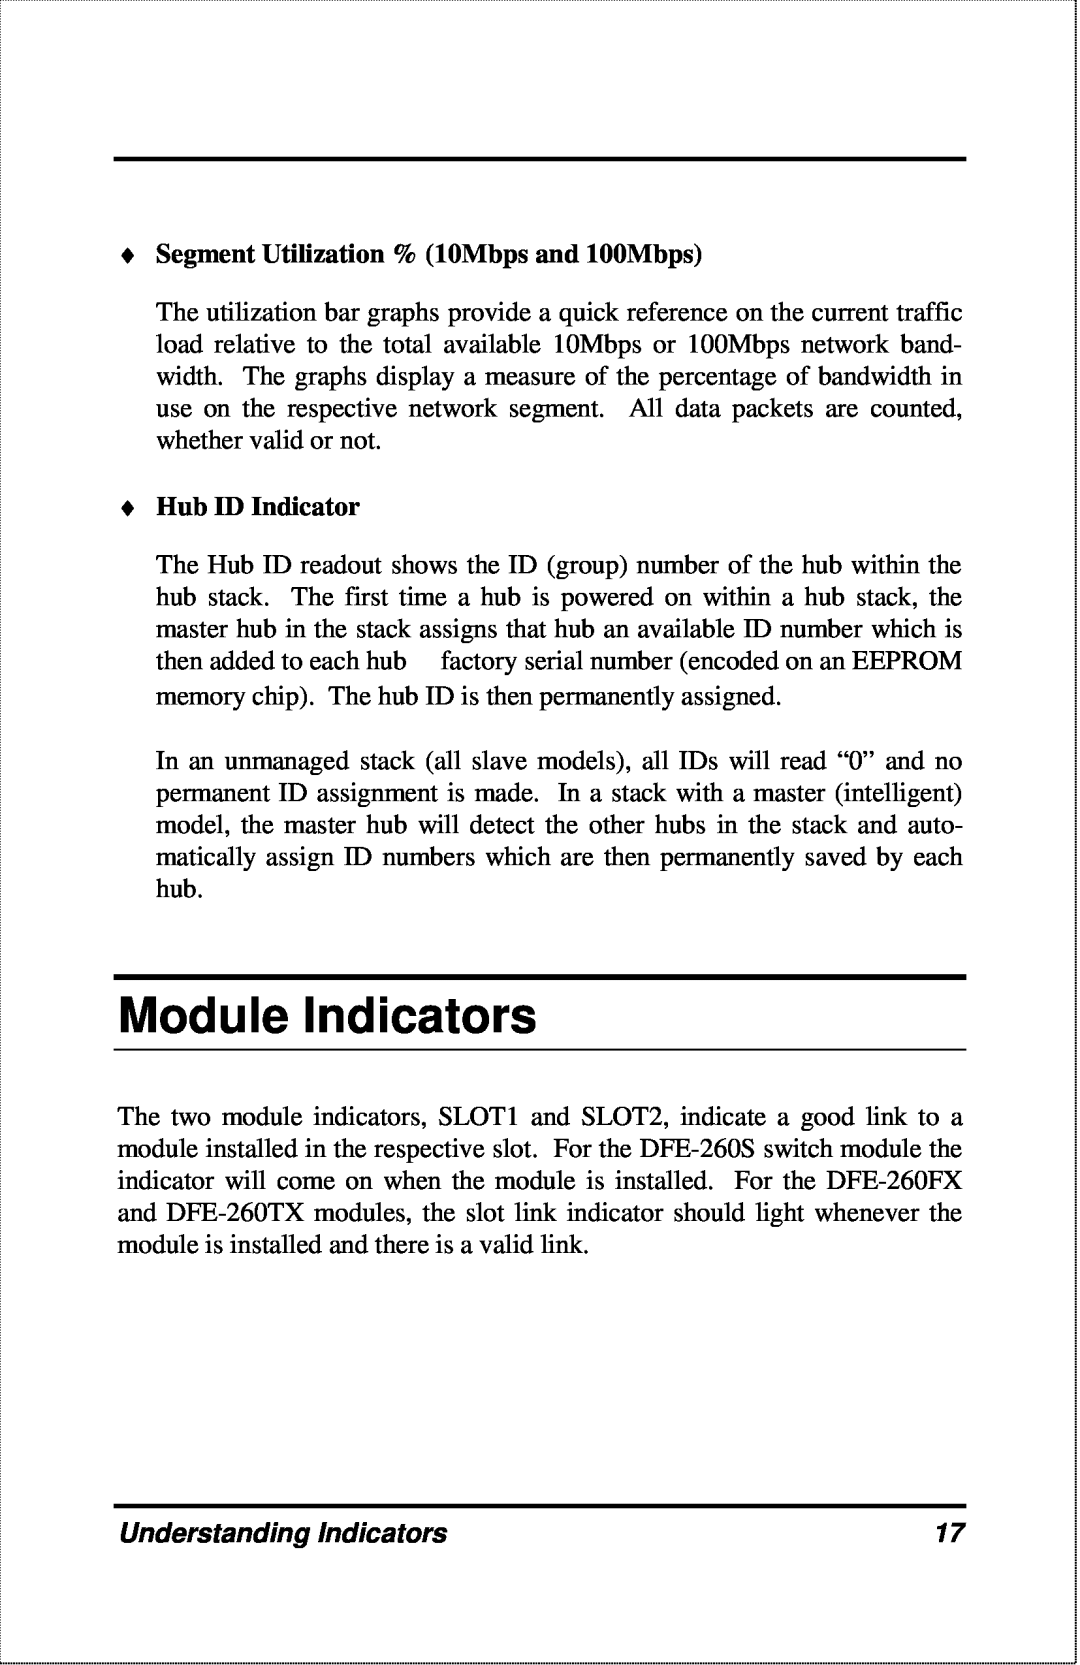 D-Link DFE-2600 Module Indicators, Segment Utilization % 10Mbps and 100Mbps, Hub ID Indicator, Understanding Indicators 